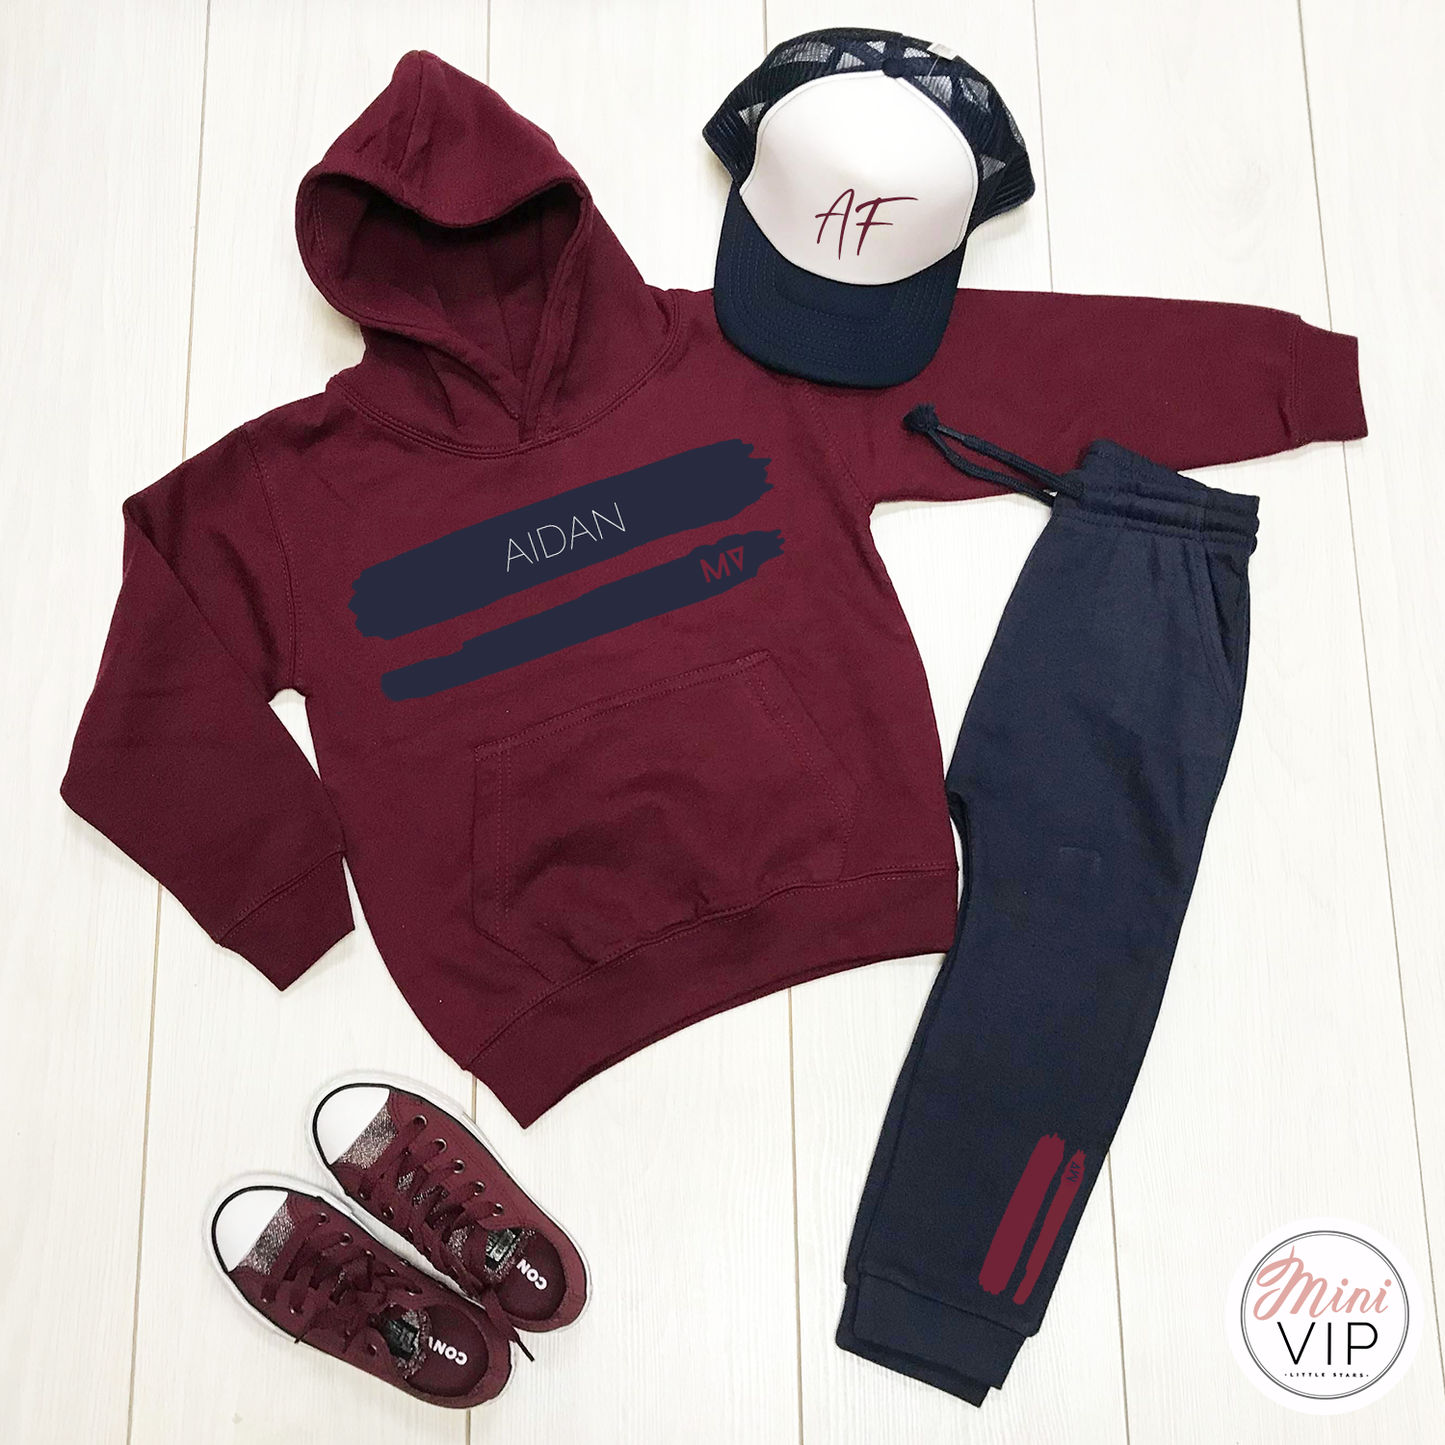 MV originals Paint joggers & hoodie/t-shirt set - Personalised